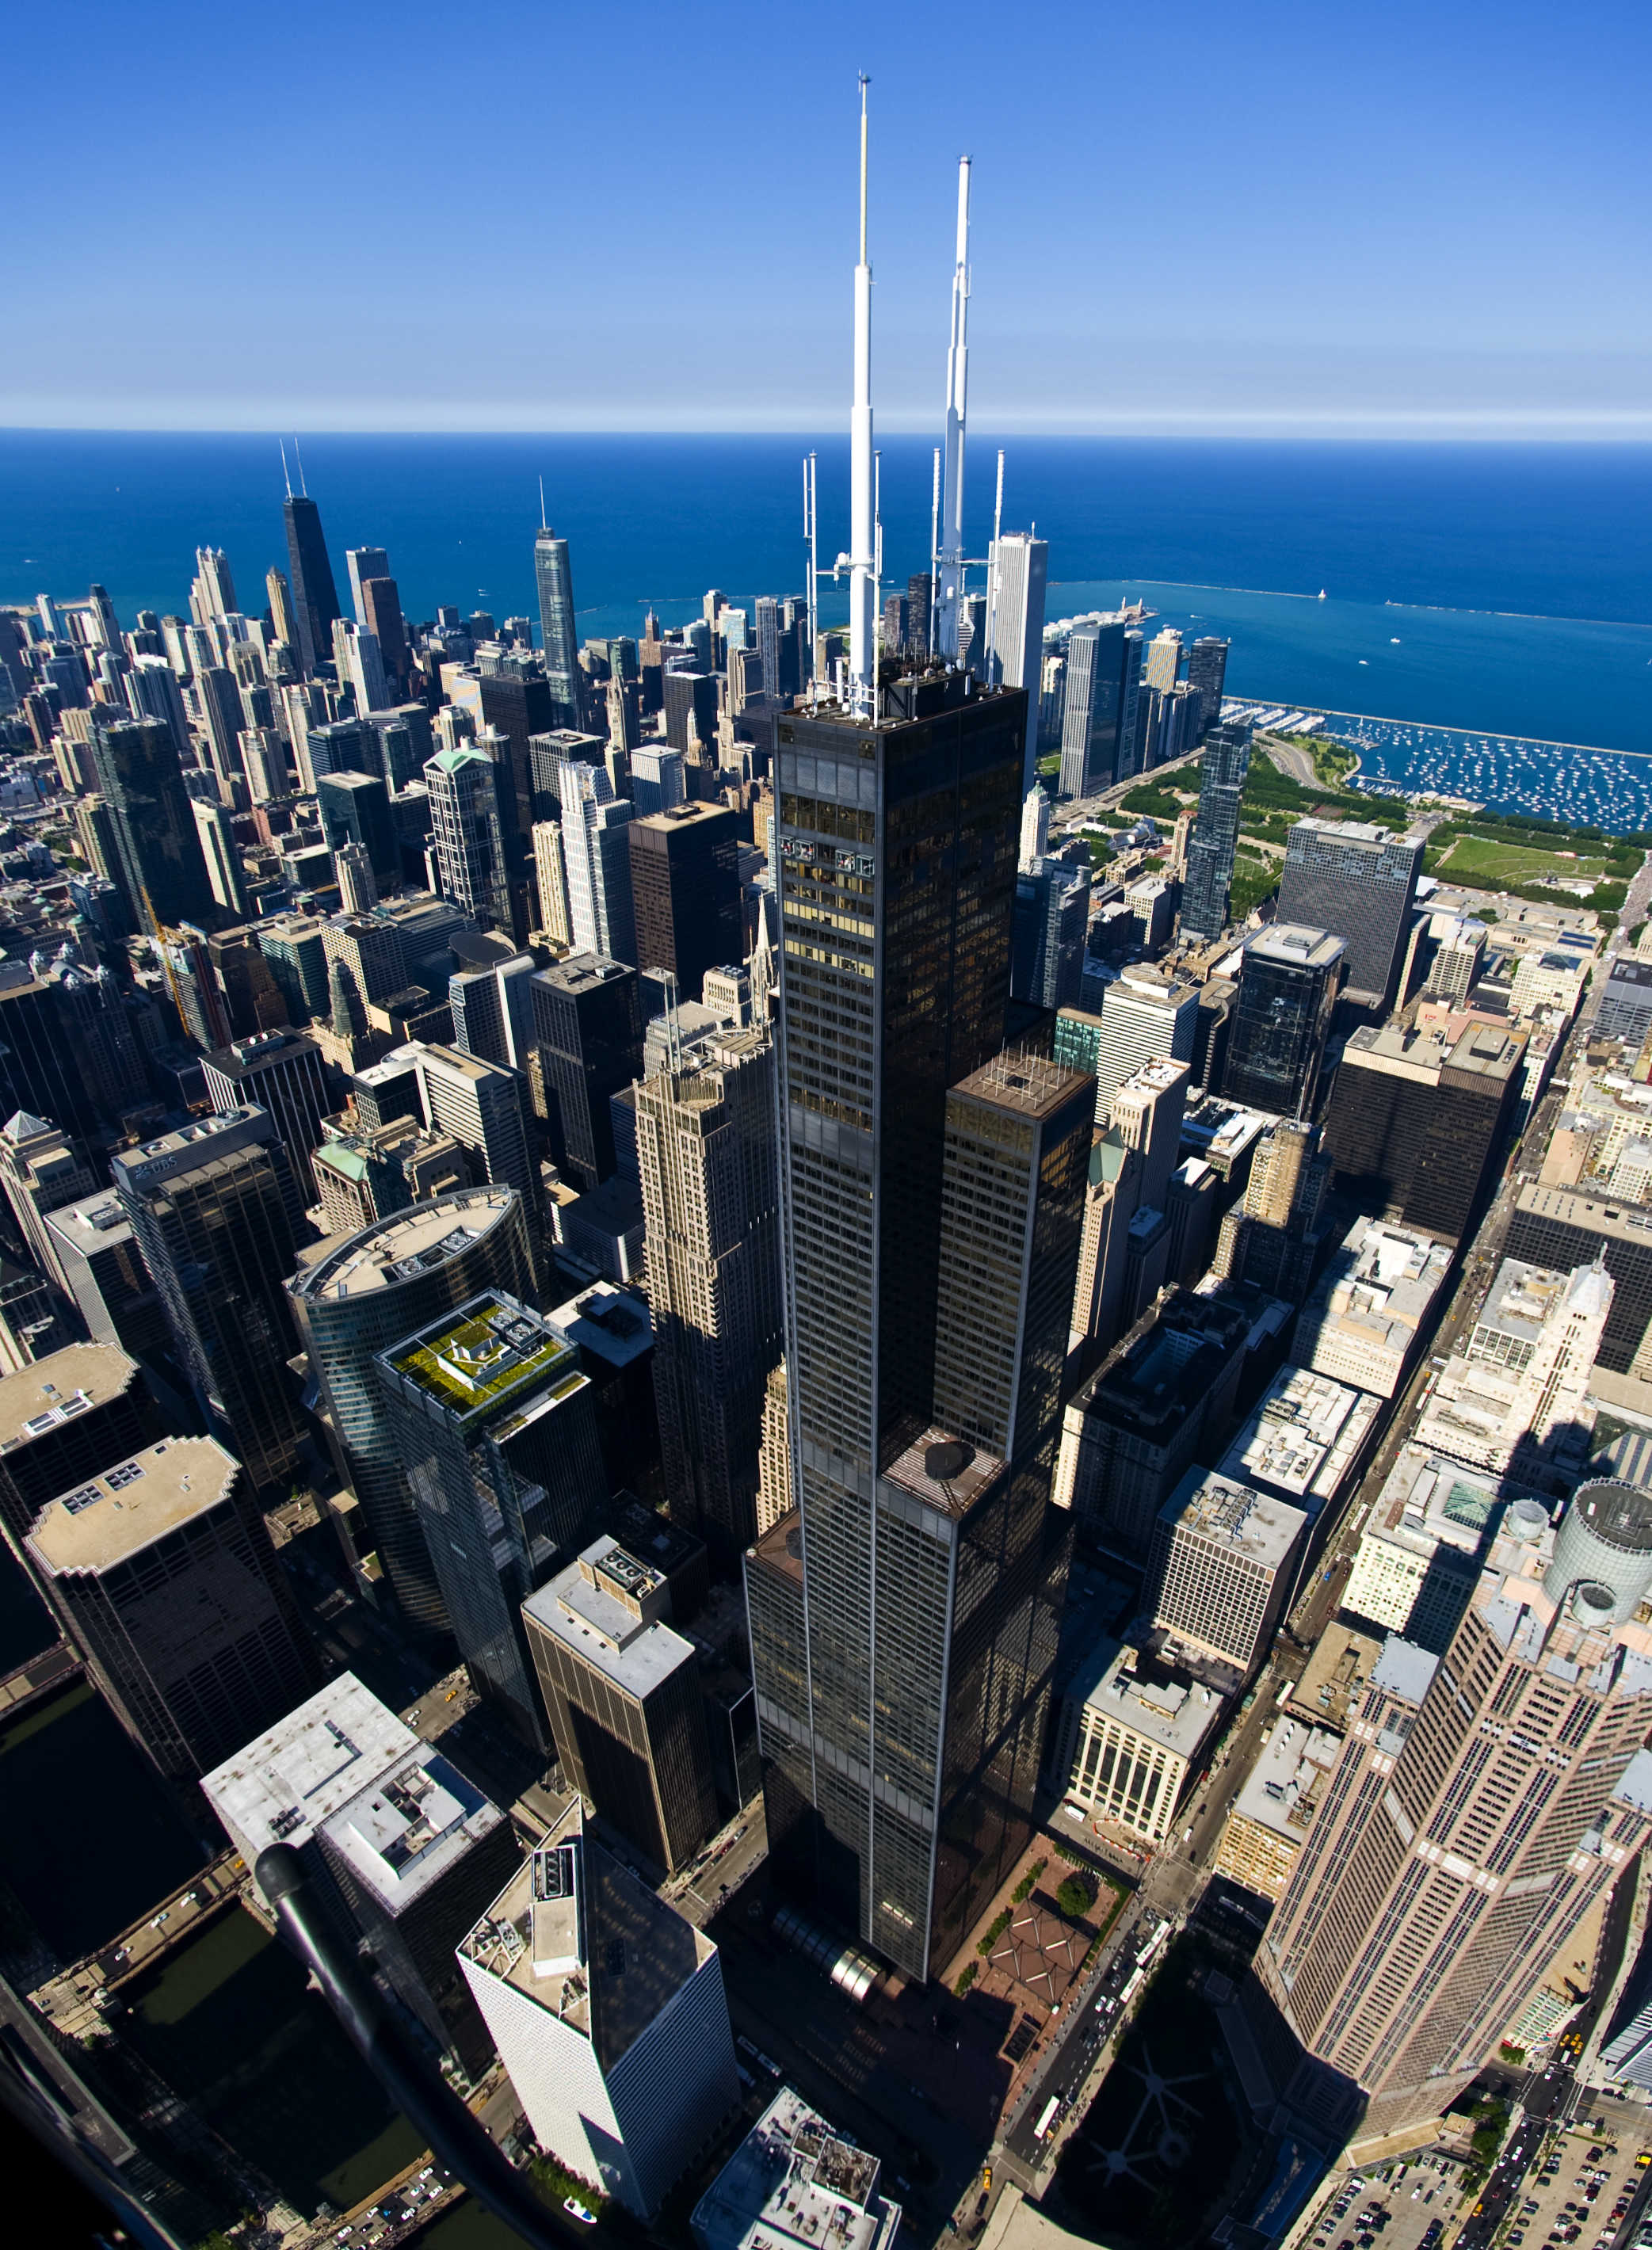 Willis Tower/Skydeck Chicago